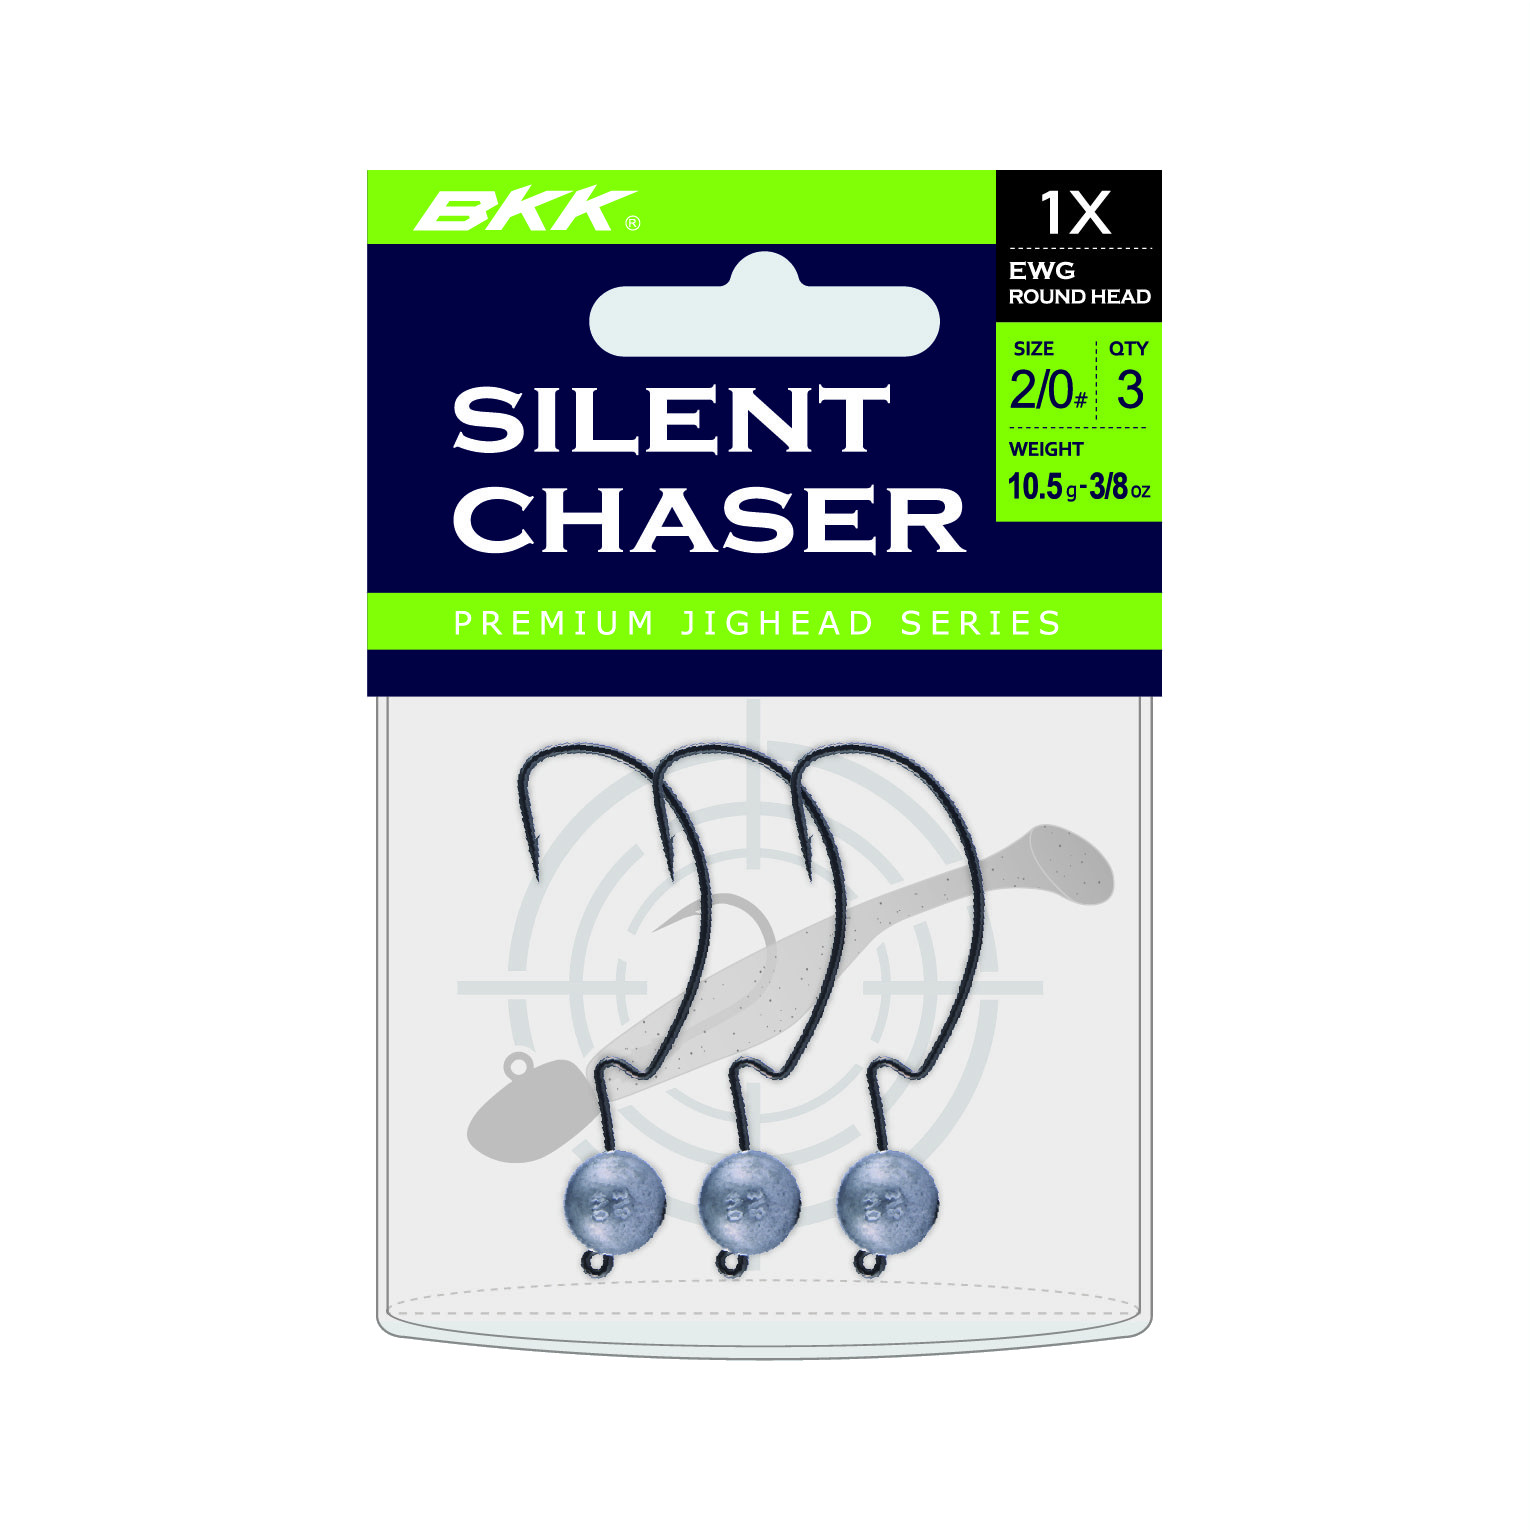 BKK Silent Chaser 1X EWG Round Head Cabeza de Plomo #1